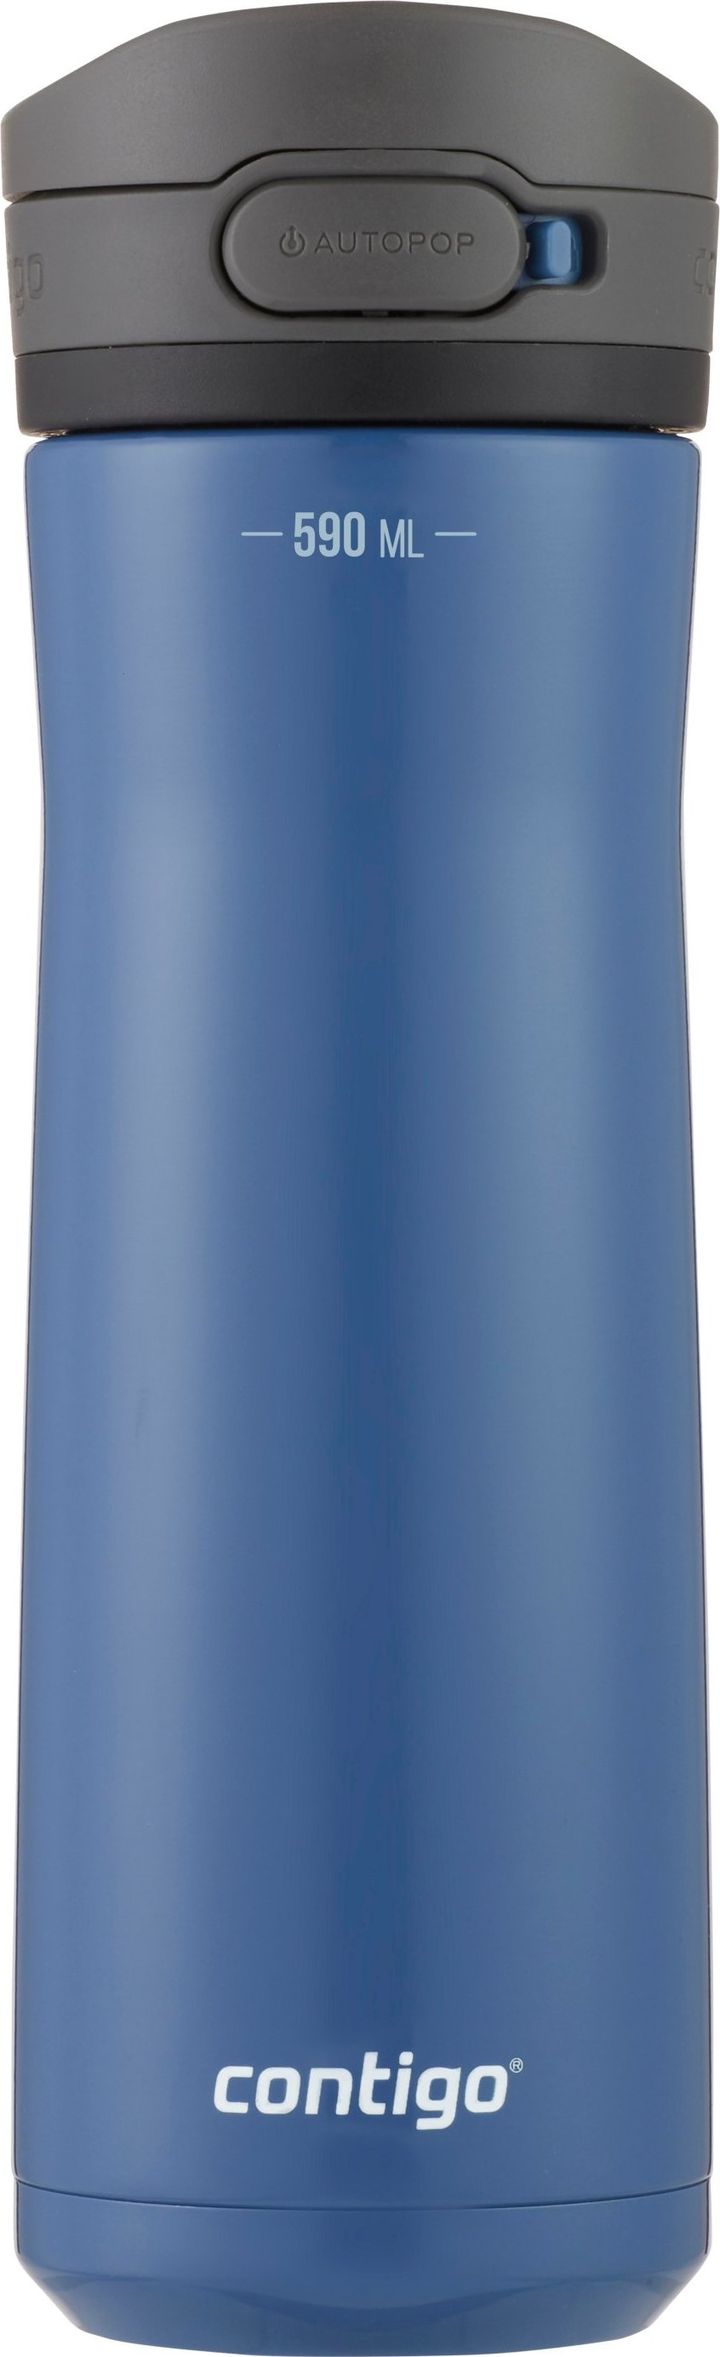 Jackson Chill Autopop Vacuum-Insulated Water Bottle 590 ml Blue Corn Contigo